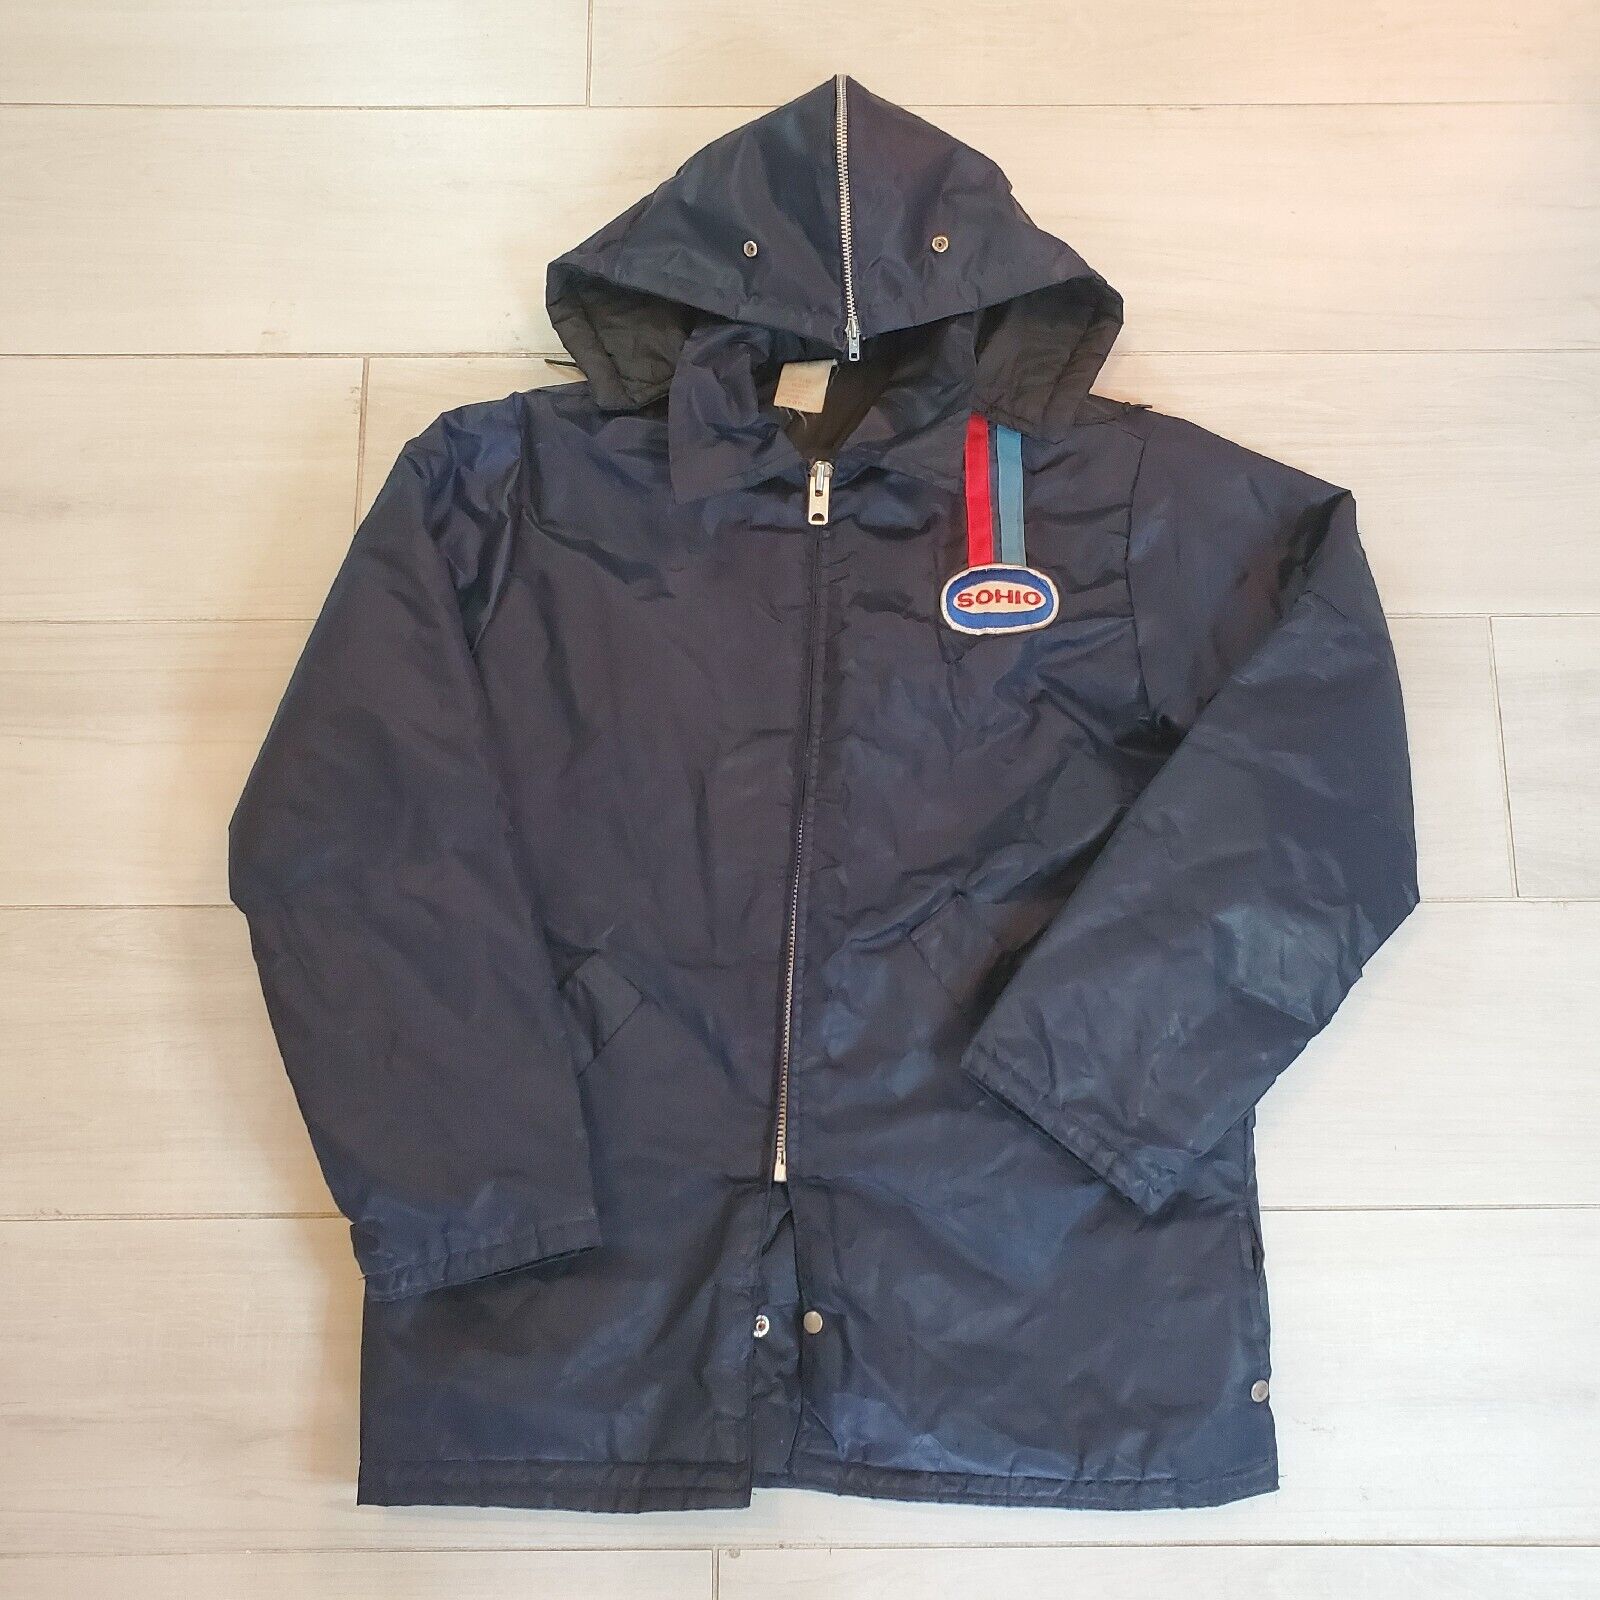 Vintage Sohio Oil Gas Service Uniform Jacket Men's Size Medium Rare Workwear 